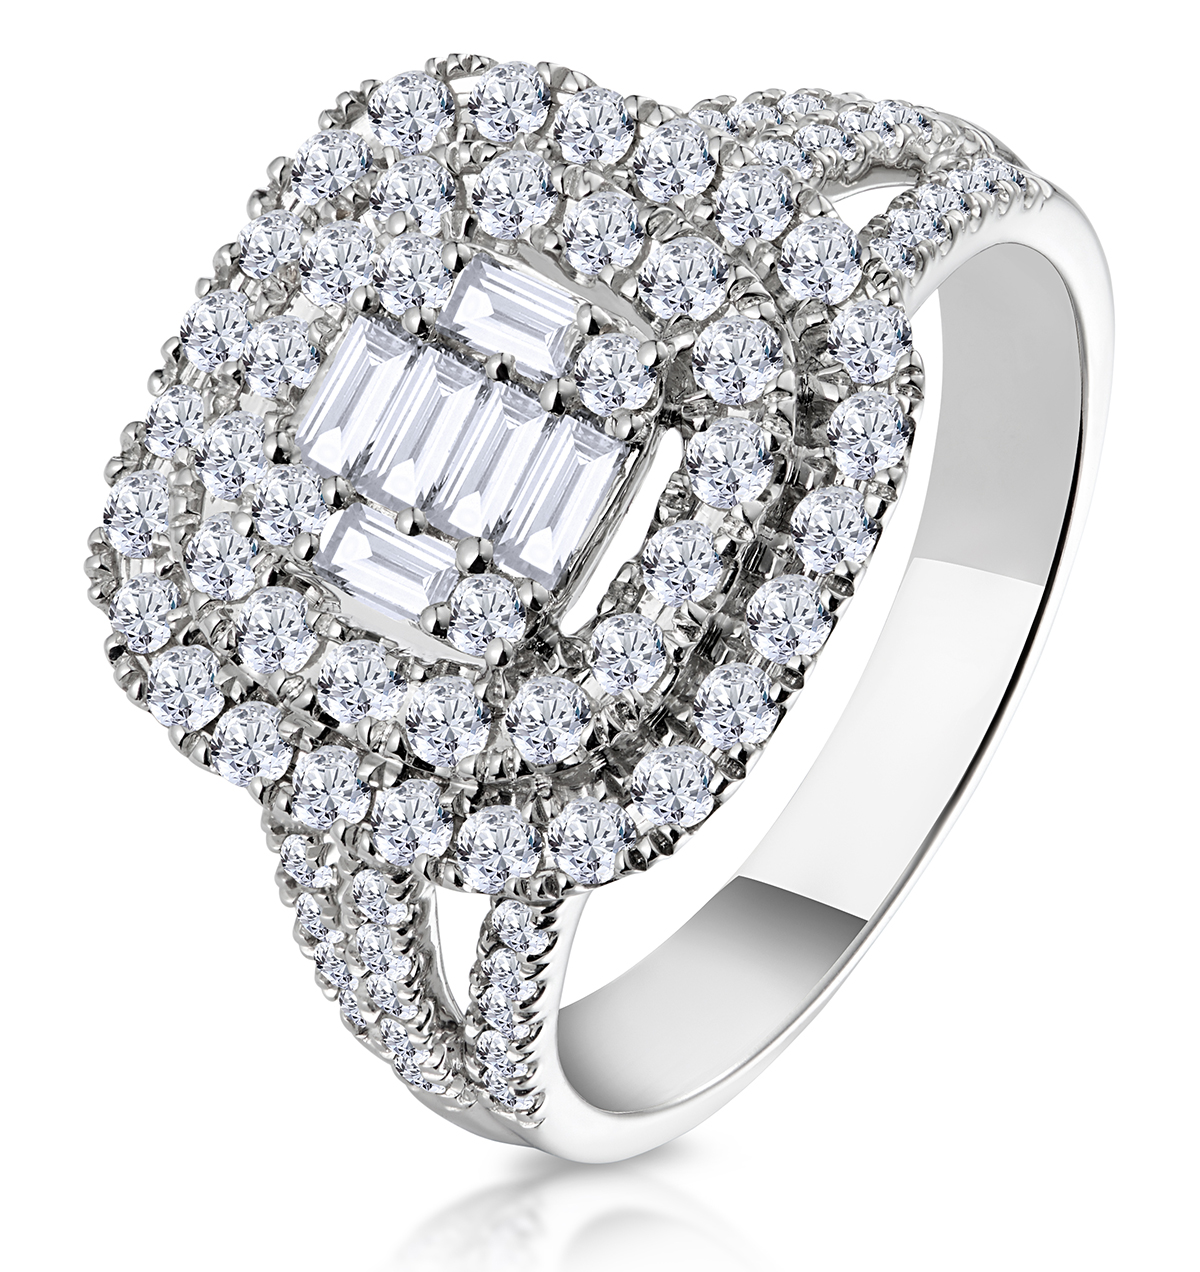 Brand New Genuine 18K White Gold 1.25 ct Engagement Eternity Ring size 7